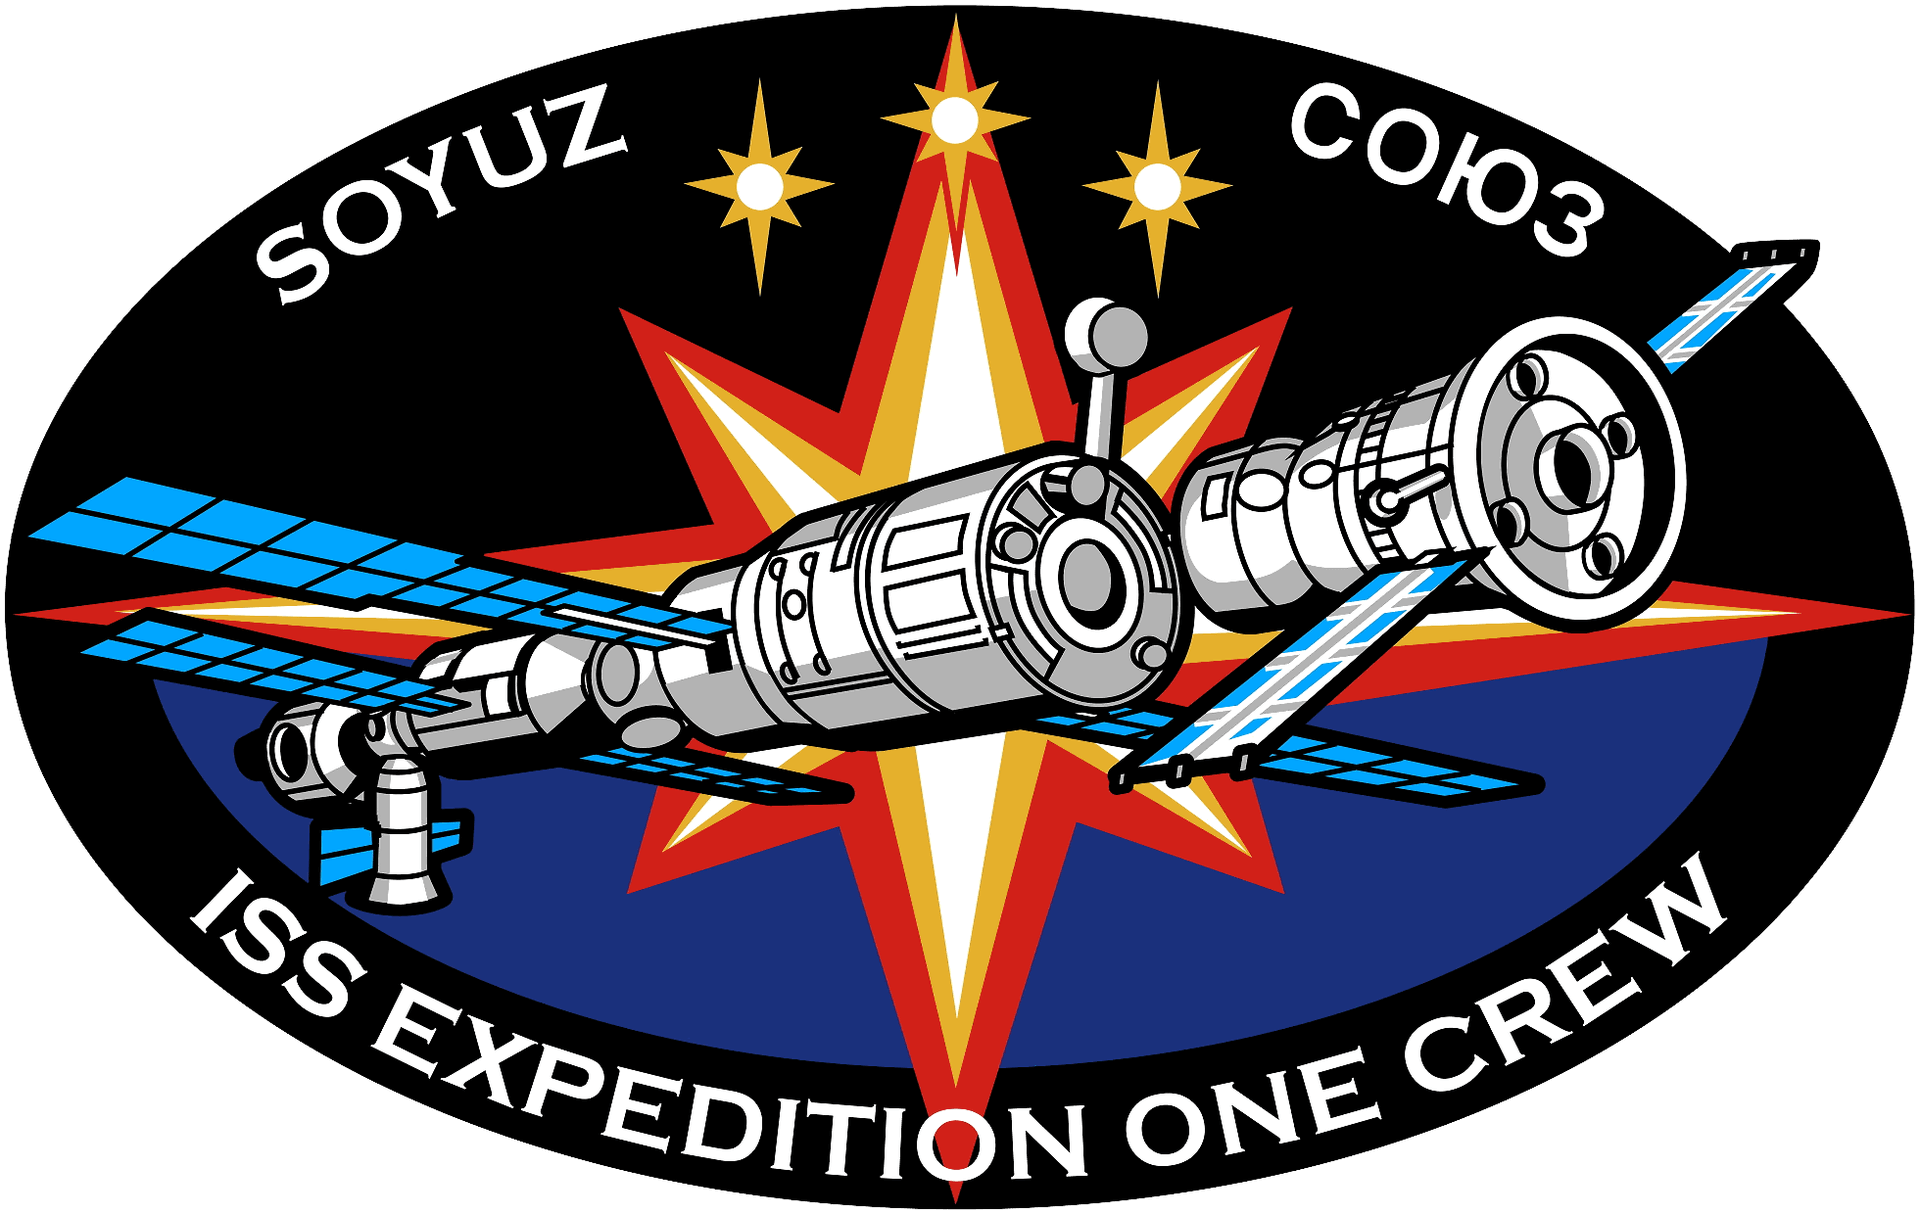 Mission patch for Soyuz TM-31